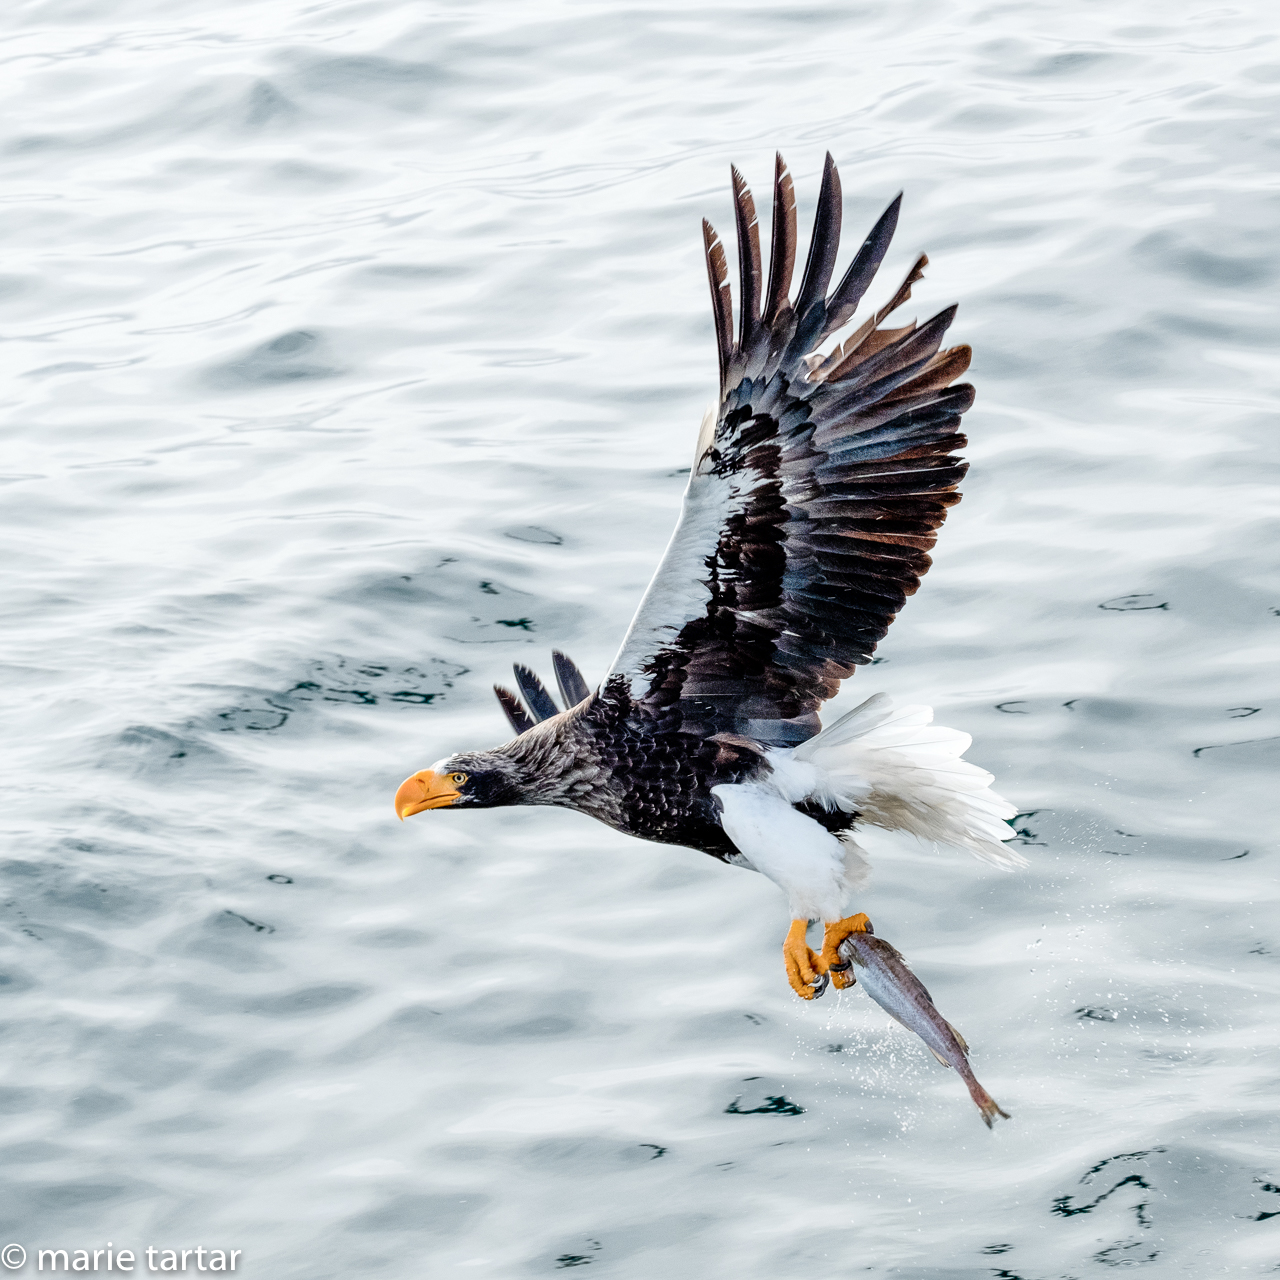 Steller's Sea Eagle snatches up a fish near Rausu, Hokkaido, Japan